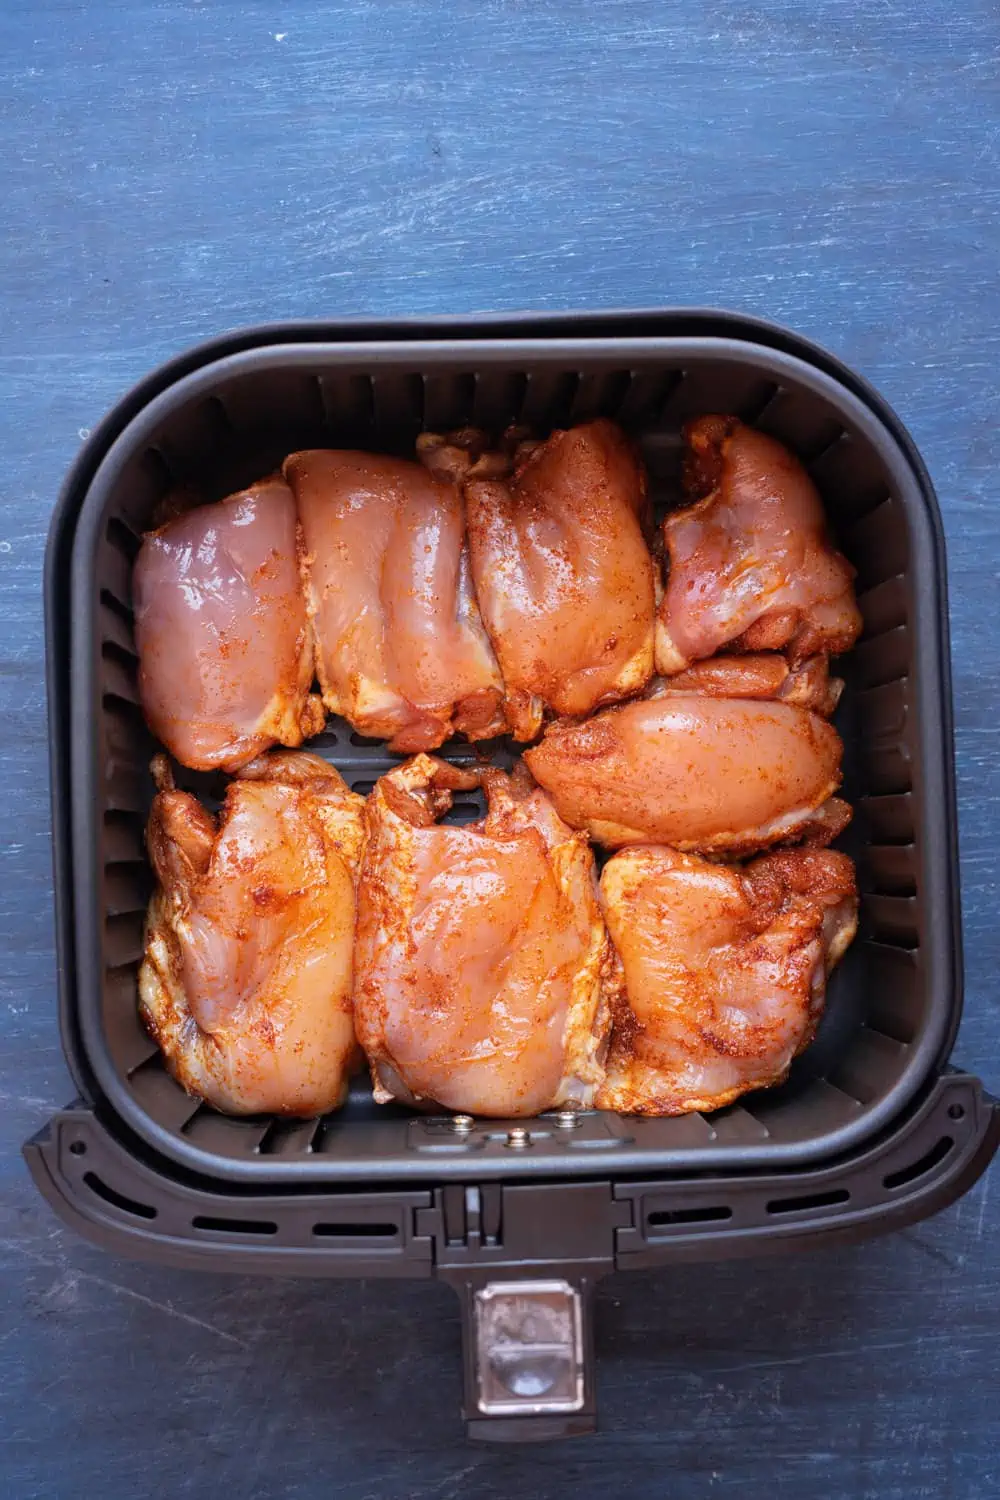 Seasoned chicken thighs in the air fryer basket.